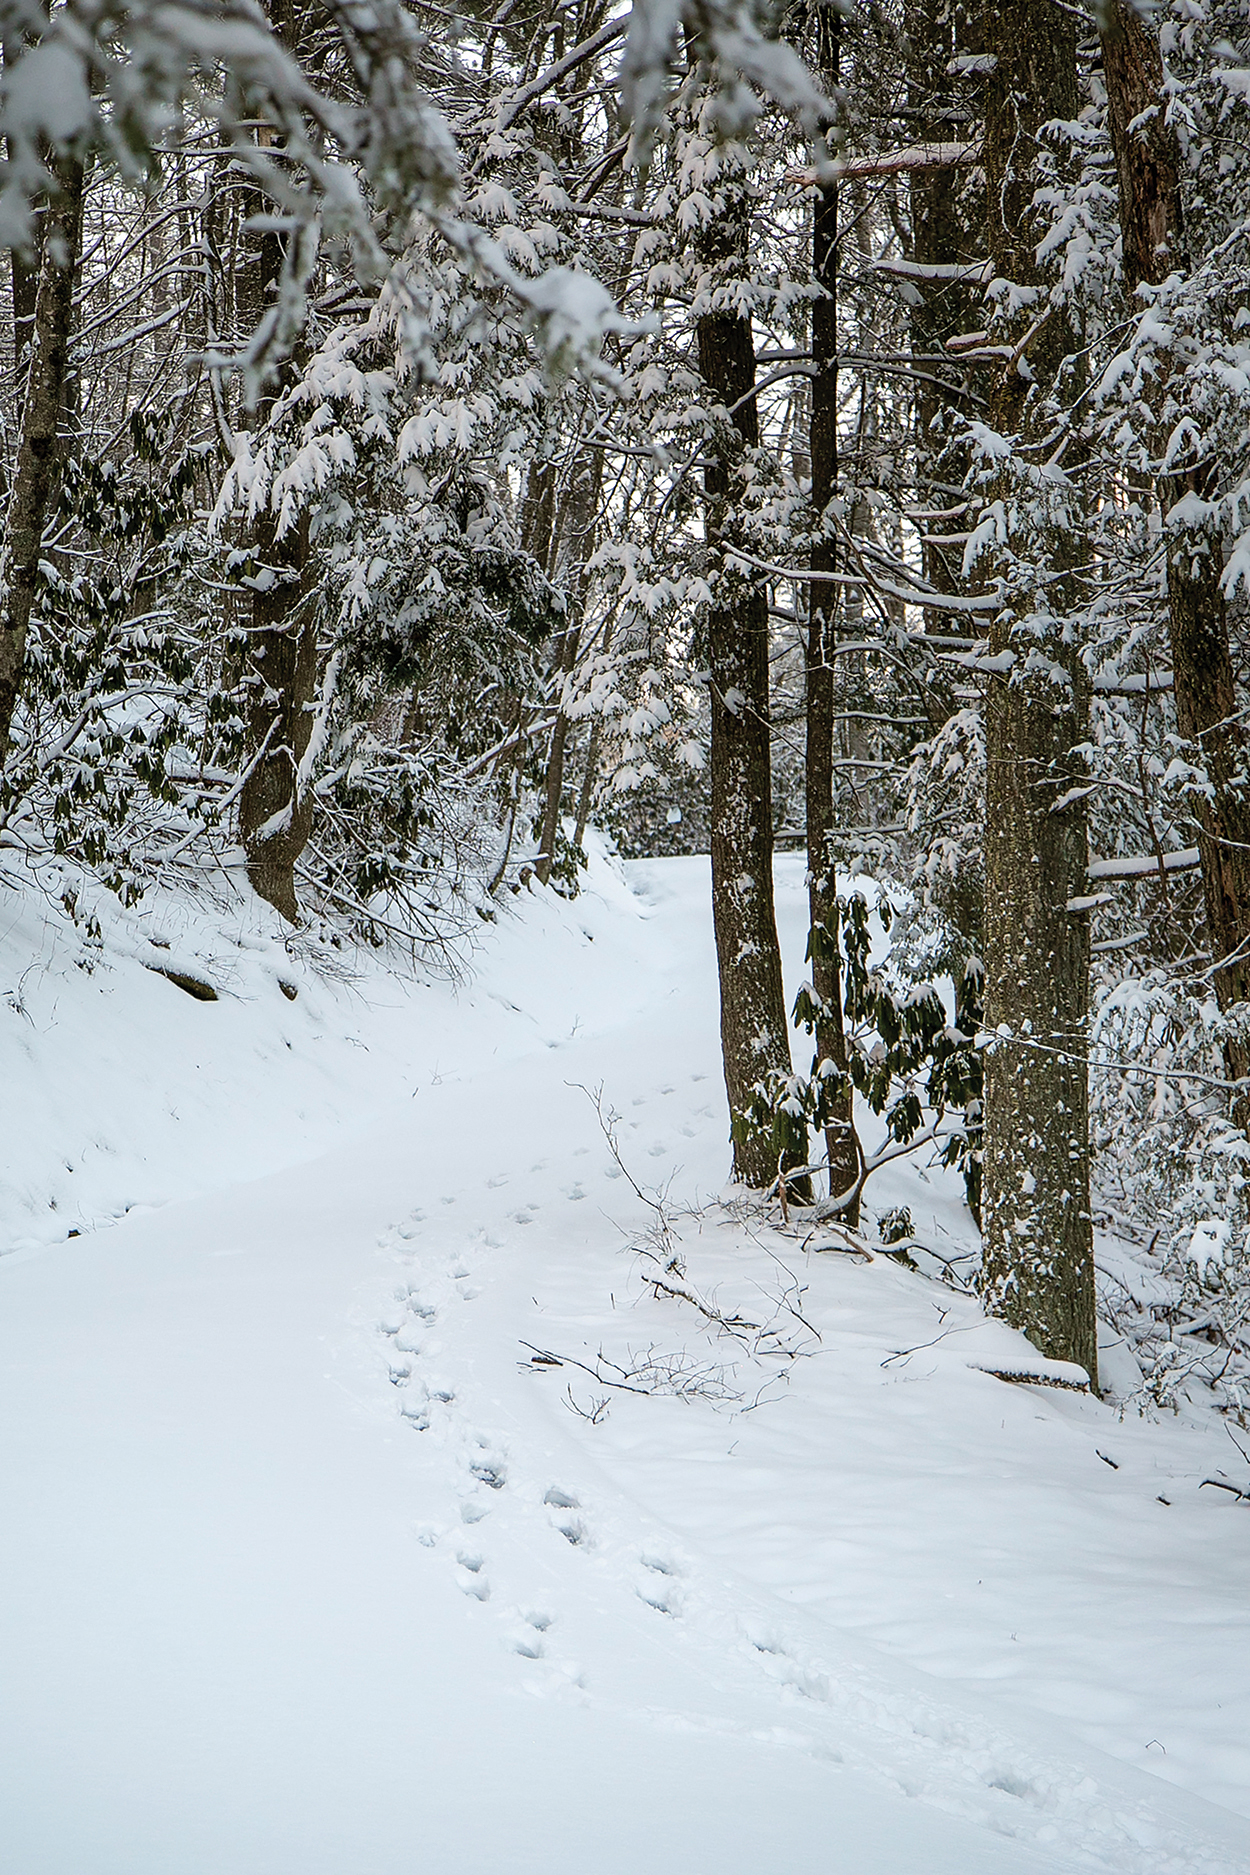 highlands-cashies-nc-winter-hiking-snow-tracks